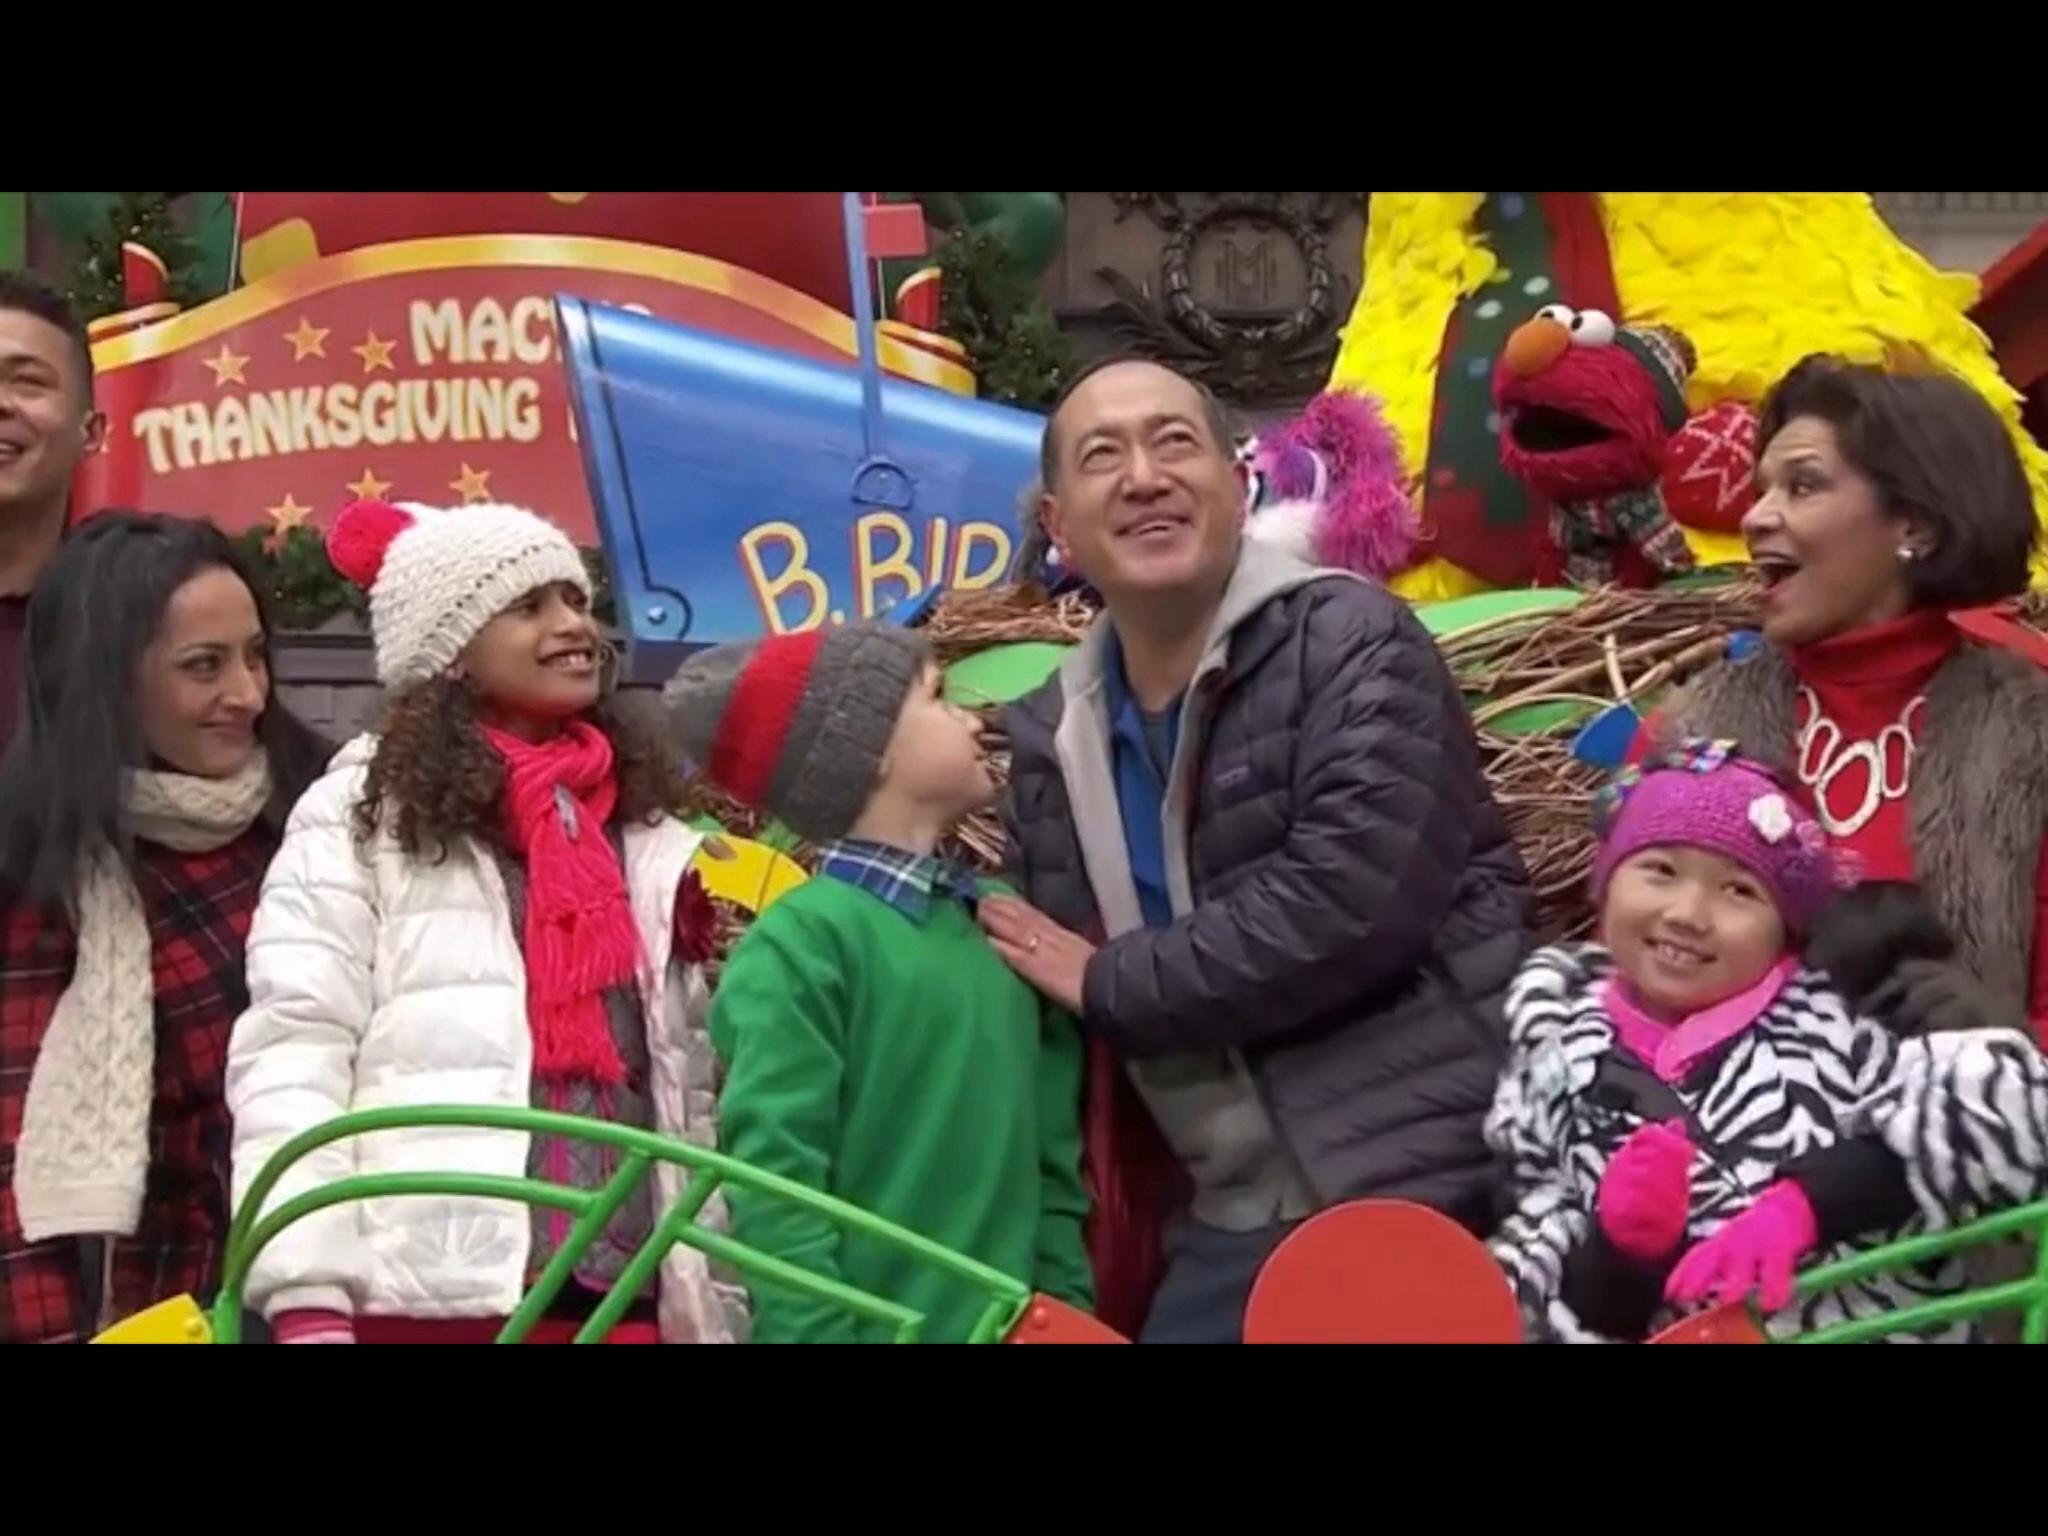 Raina Cheng & cast of a Sesame Street float performing on the Sesame Street float at the Macy's Thanksgiving Day Parade. 2014